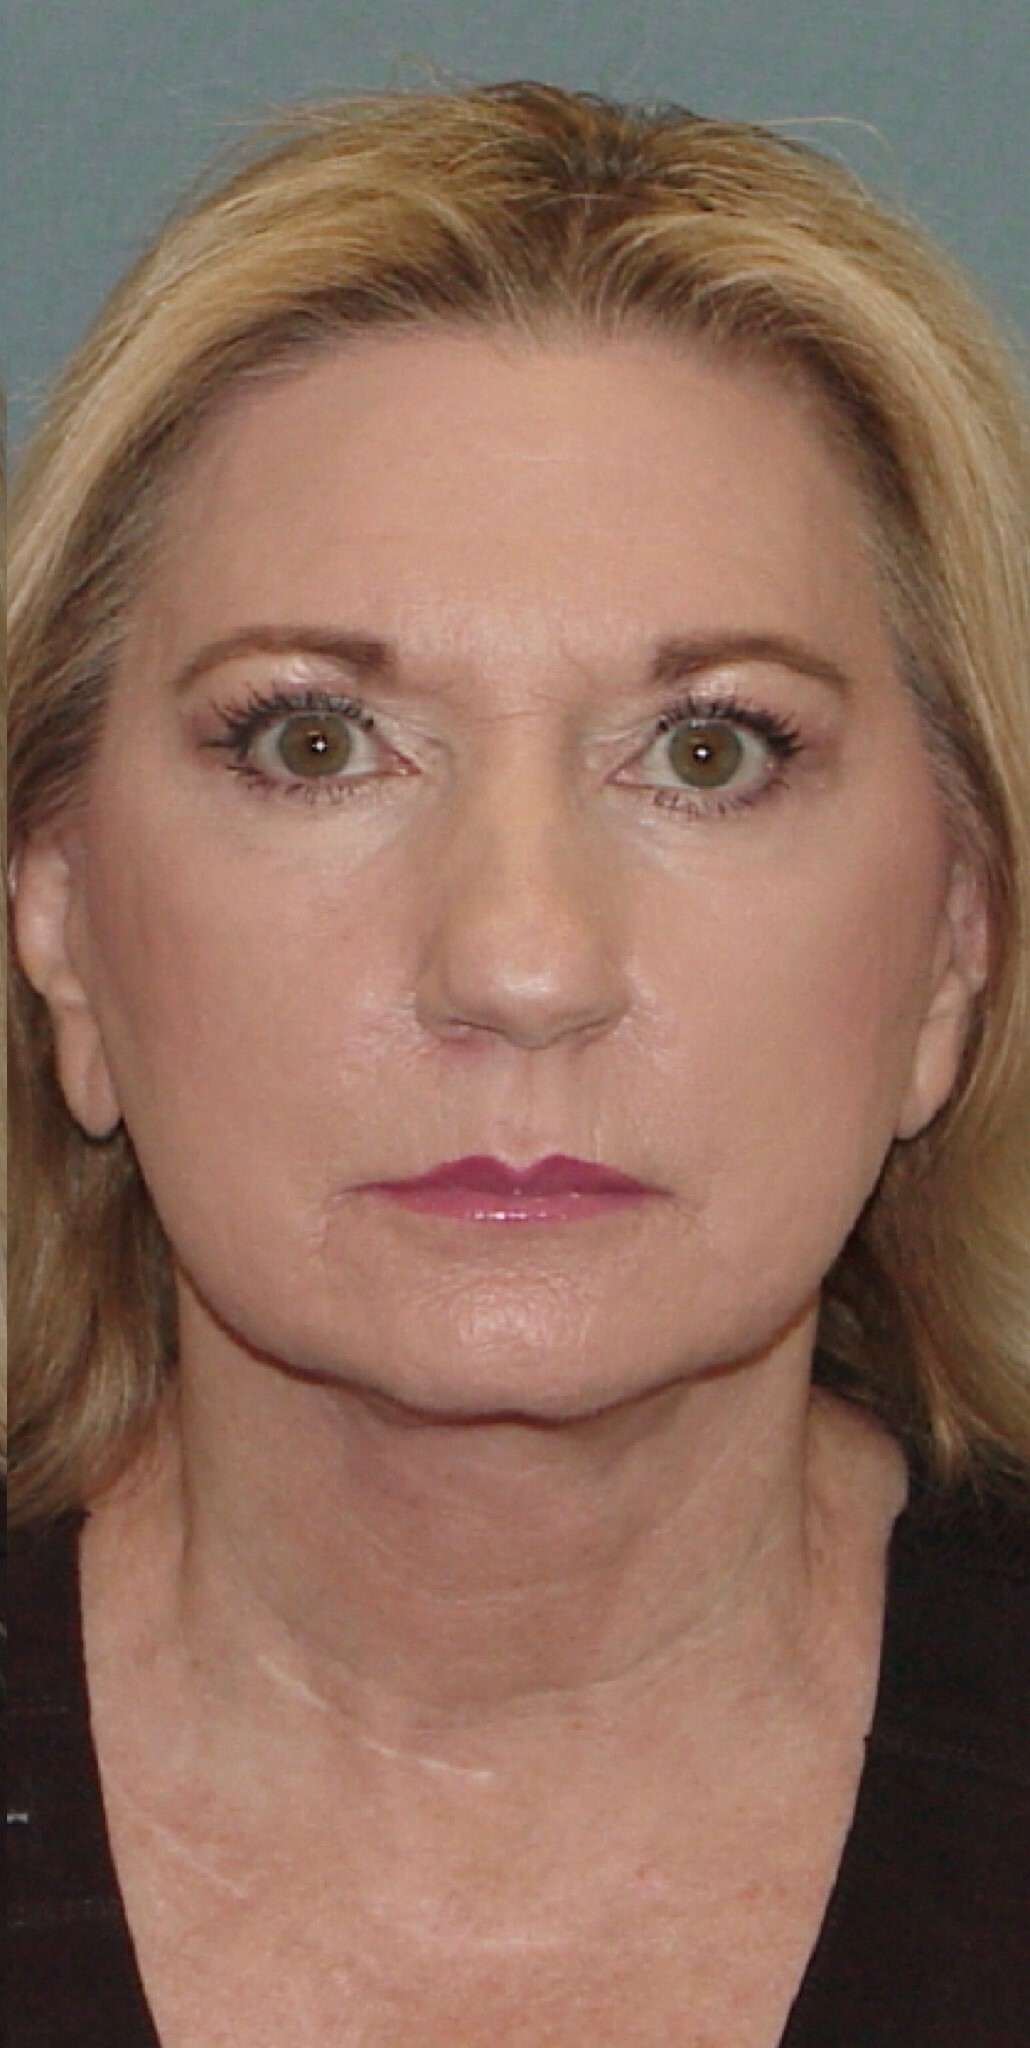 Photo of the patient’s face after the Facelift surgery. Set 1. Patient 3